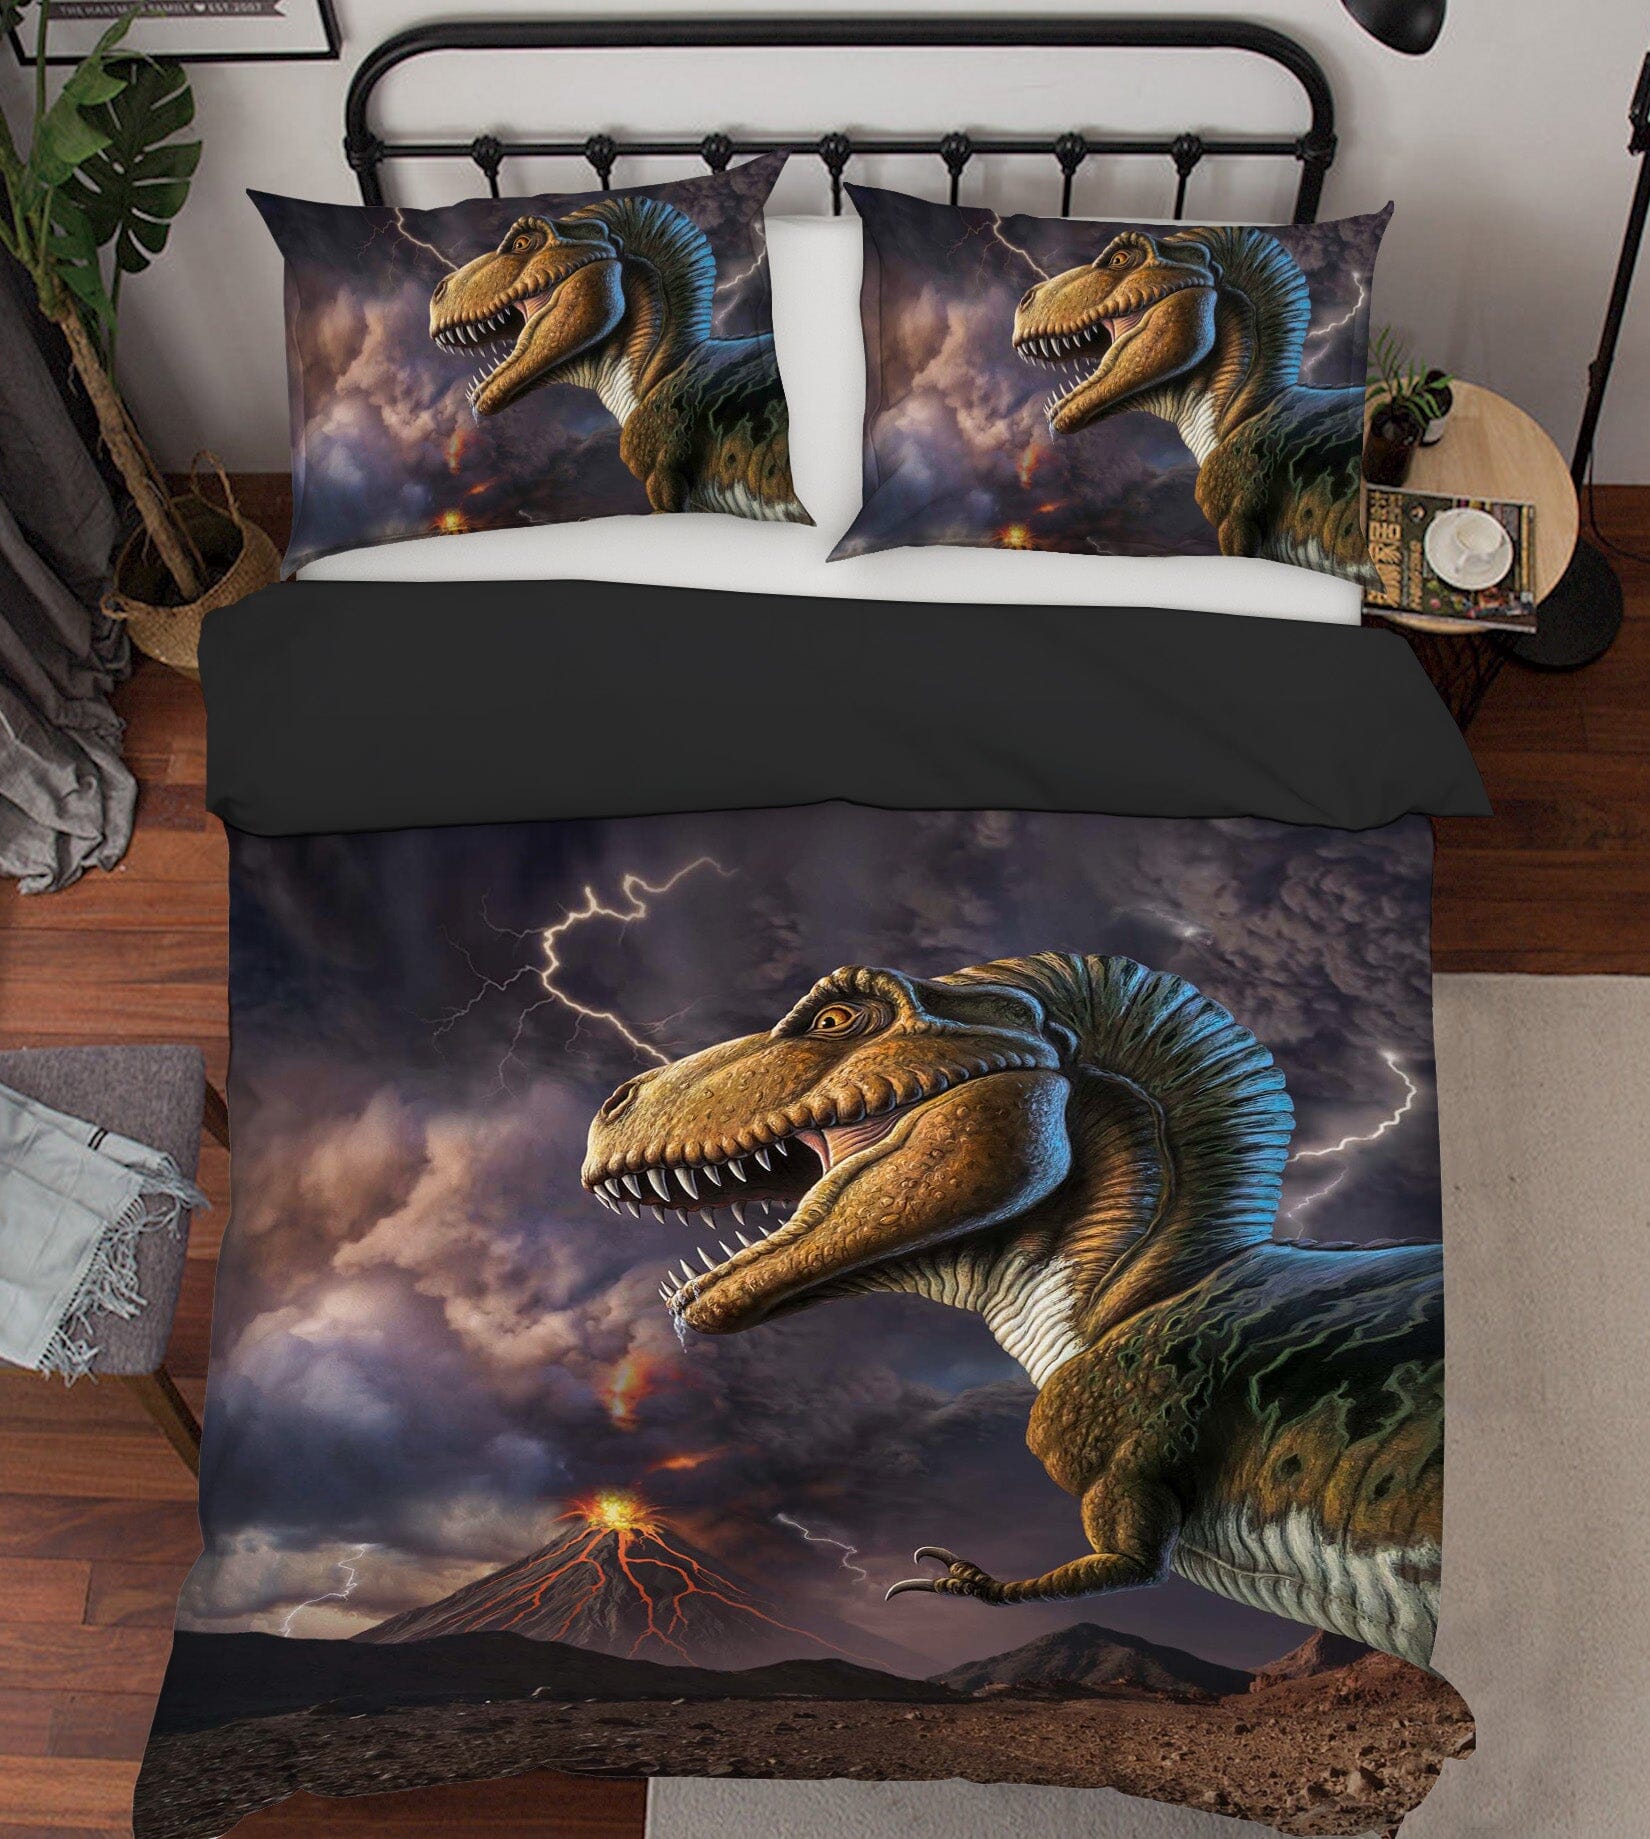 3D Volcano Rex 2135 Jerry LoFaro bedding Bed Pillowcases Quilt Quiet Covers AJ Creativity Home 